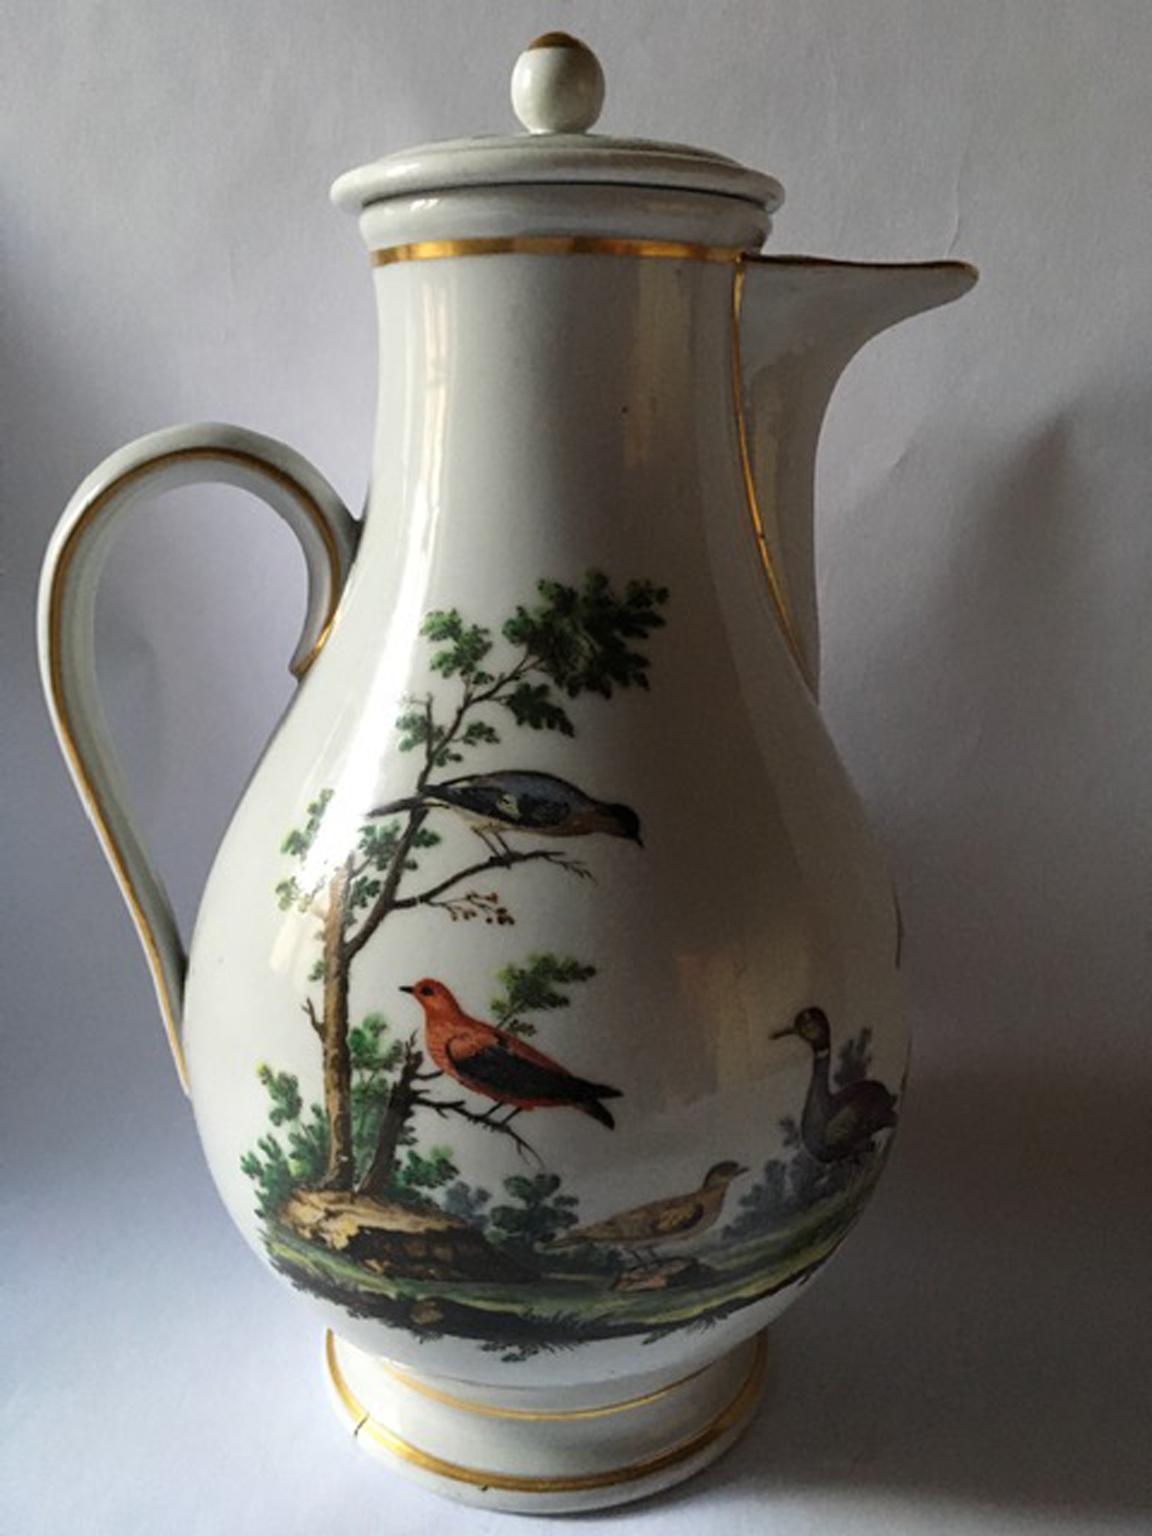 Italy Richard Ginori Mid-18th Century Porcelain Coffee Pot For Sale 5